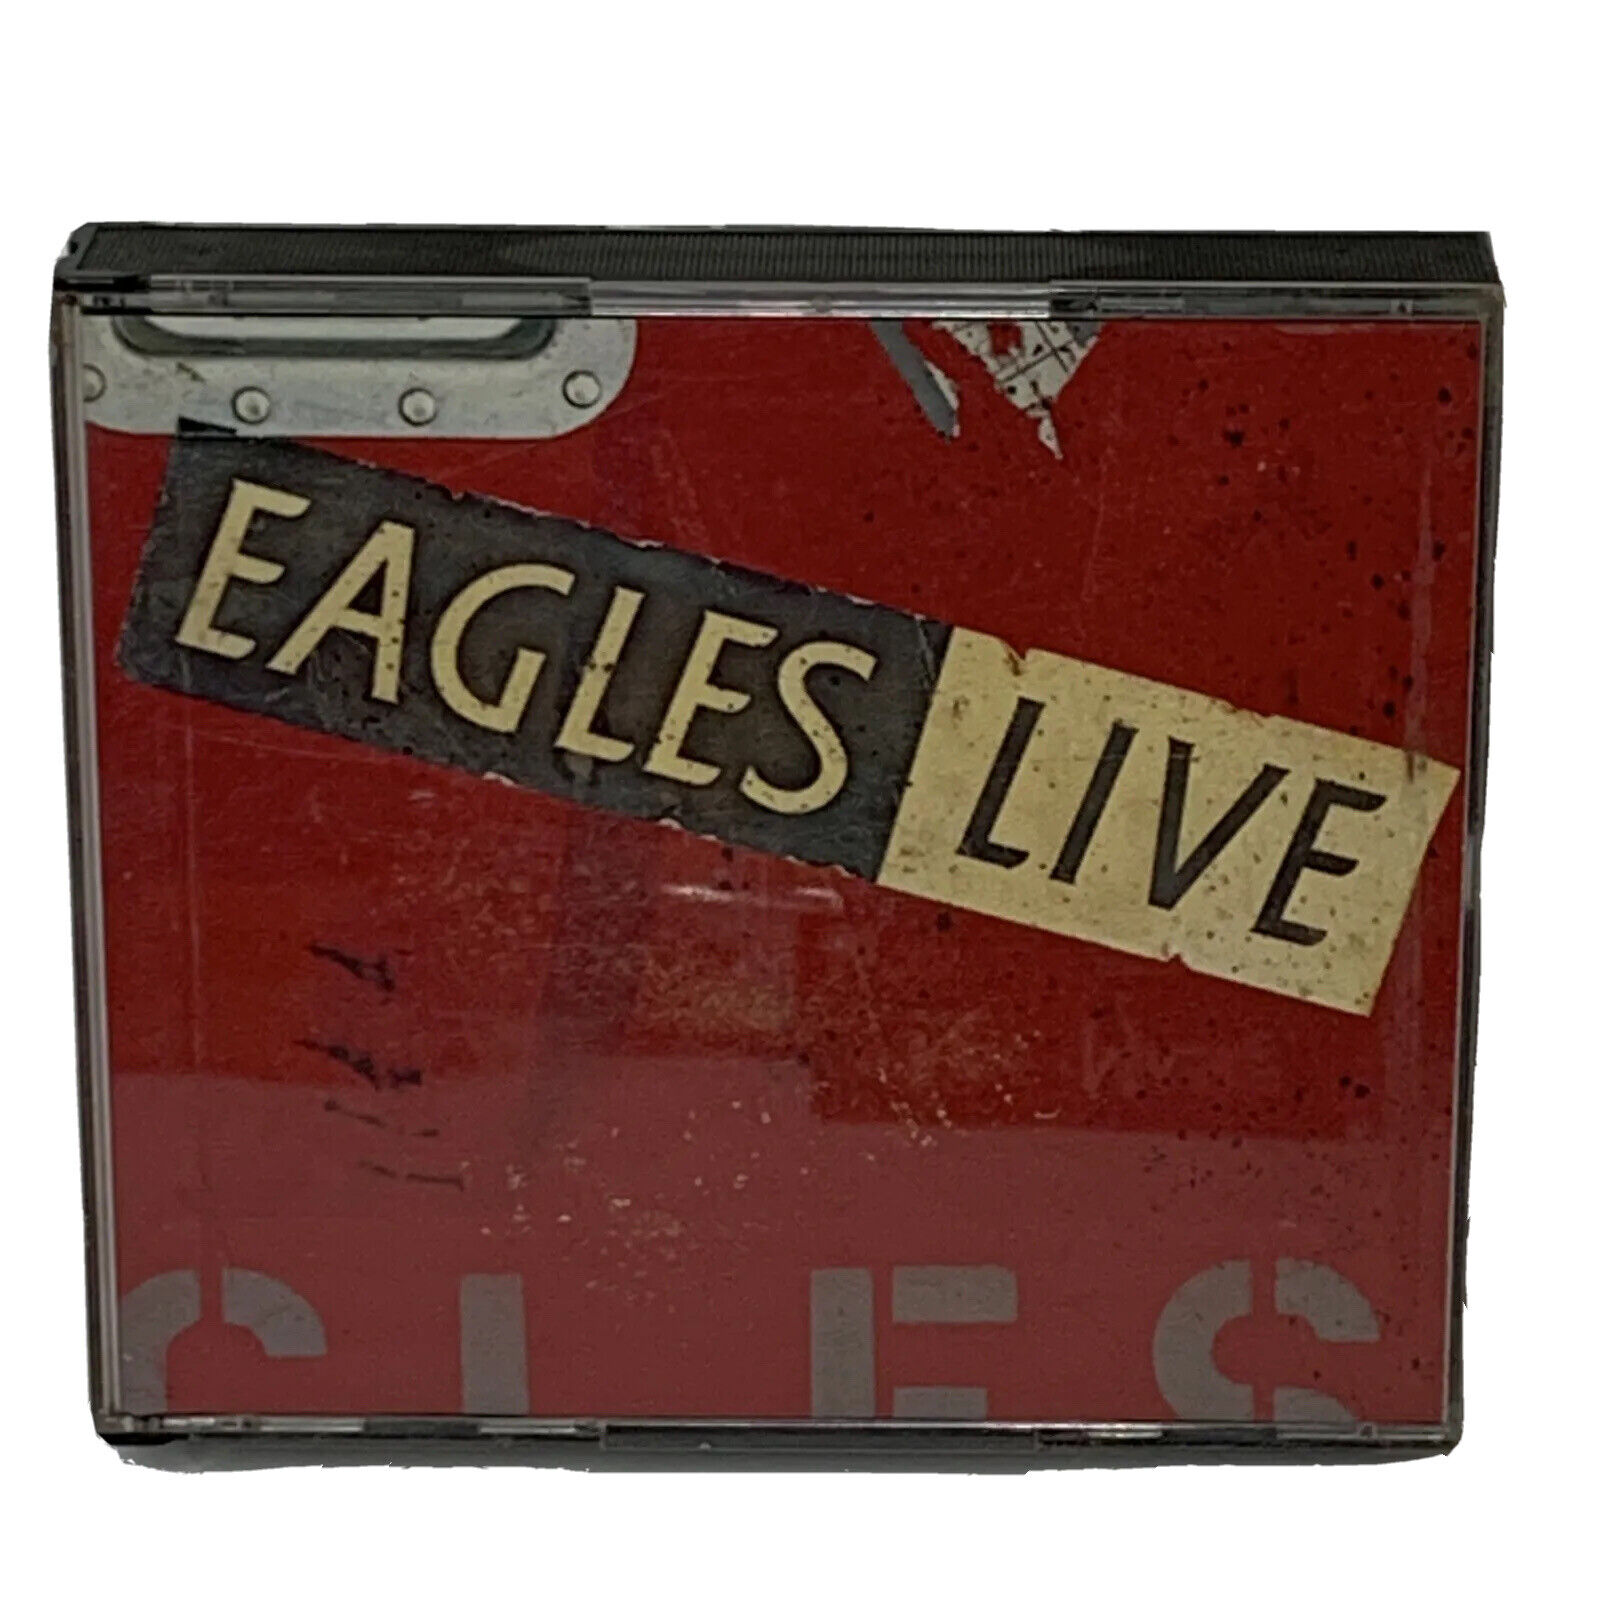 EAGLES LIVE ~ ORIGINAL DOUBLE CD  ~  ROCK & ROLL   First Release, Vintage 1980